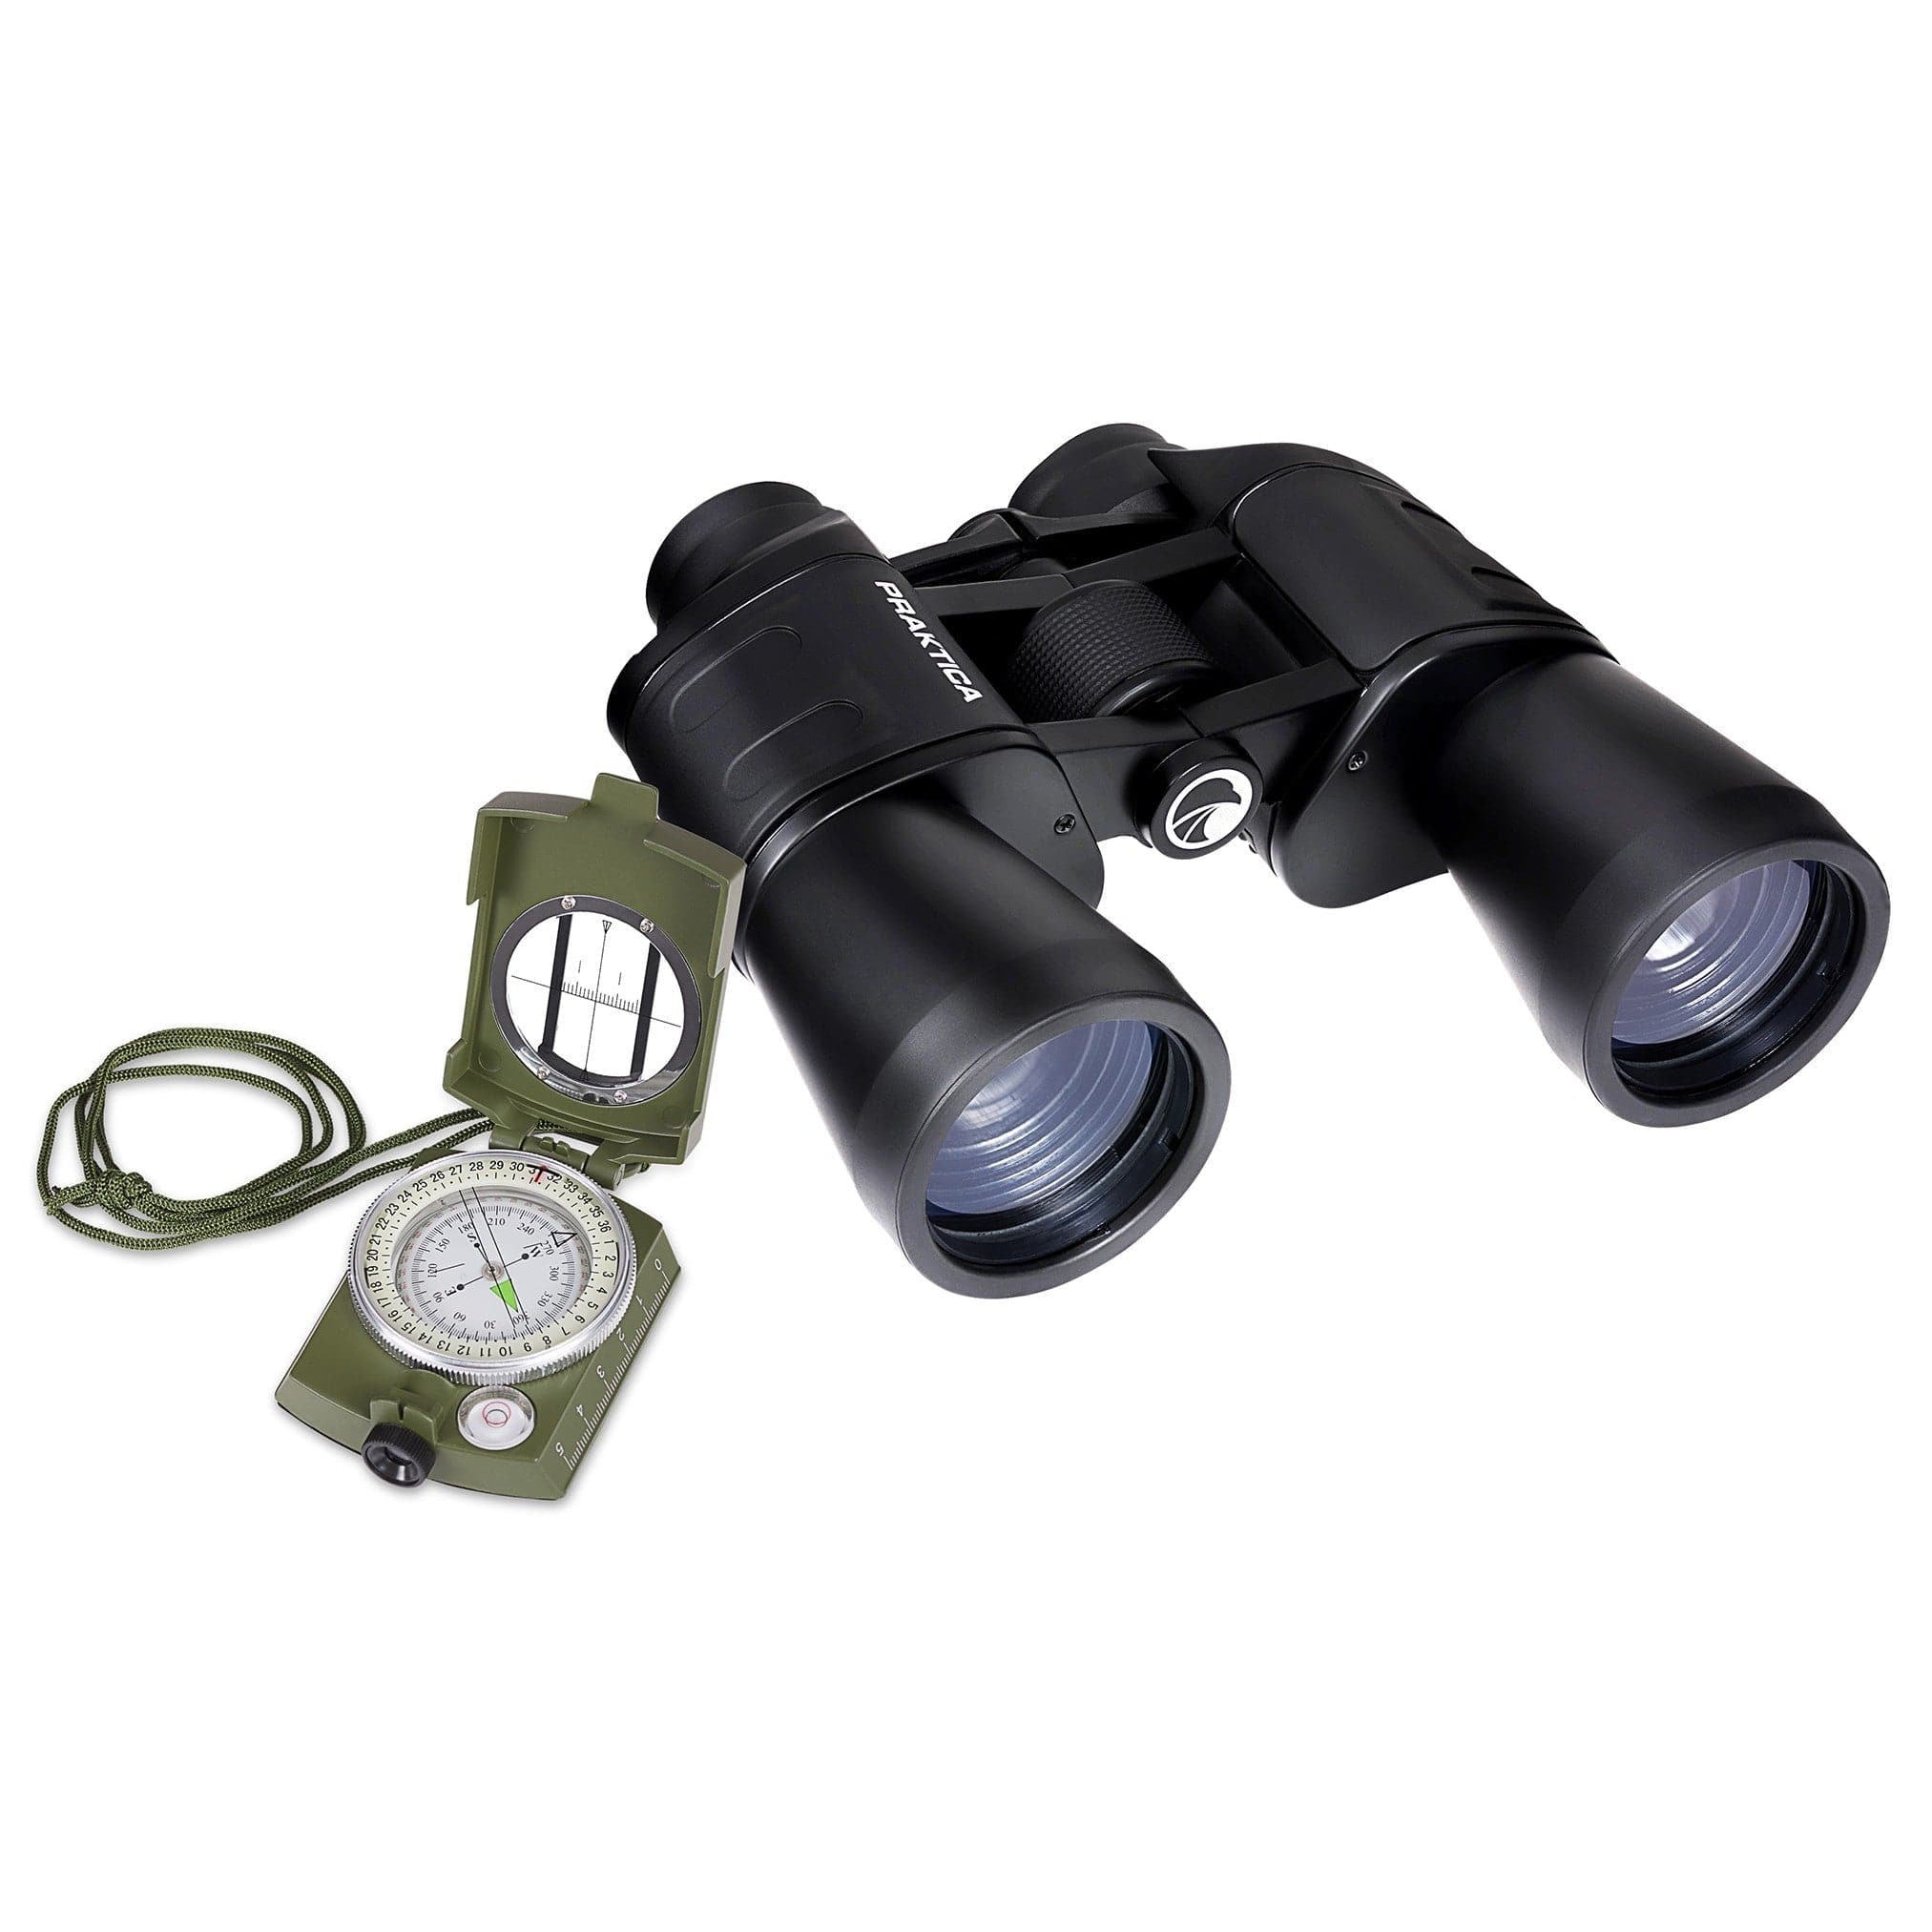 PRAKTICA Falcon 12x50mm Porro Prism Field Binoculars - Black (Binoculars + Compass)